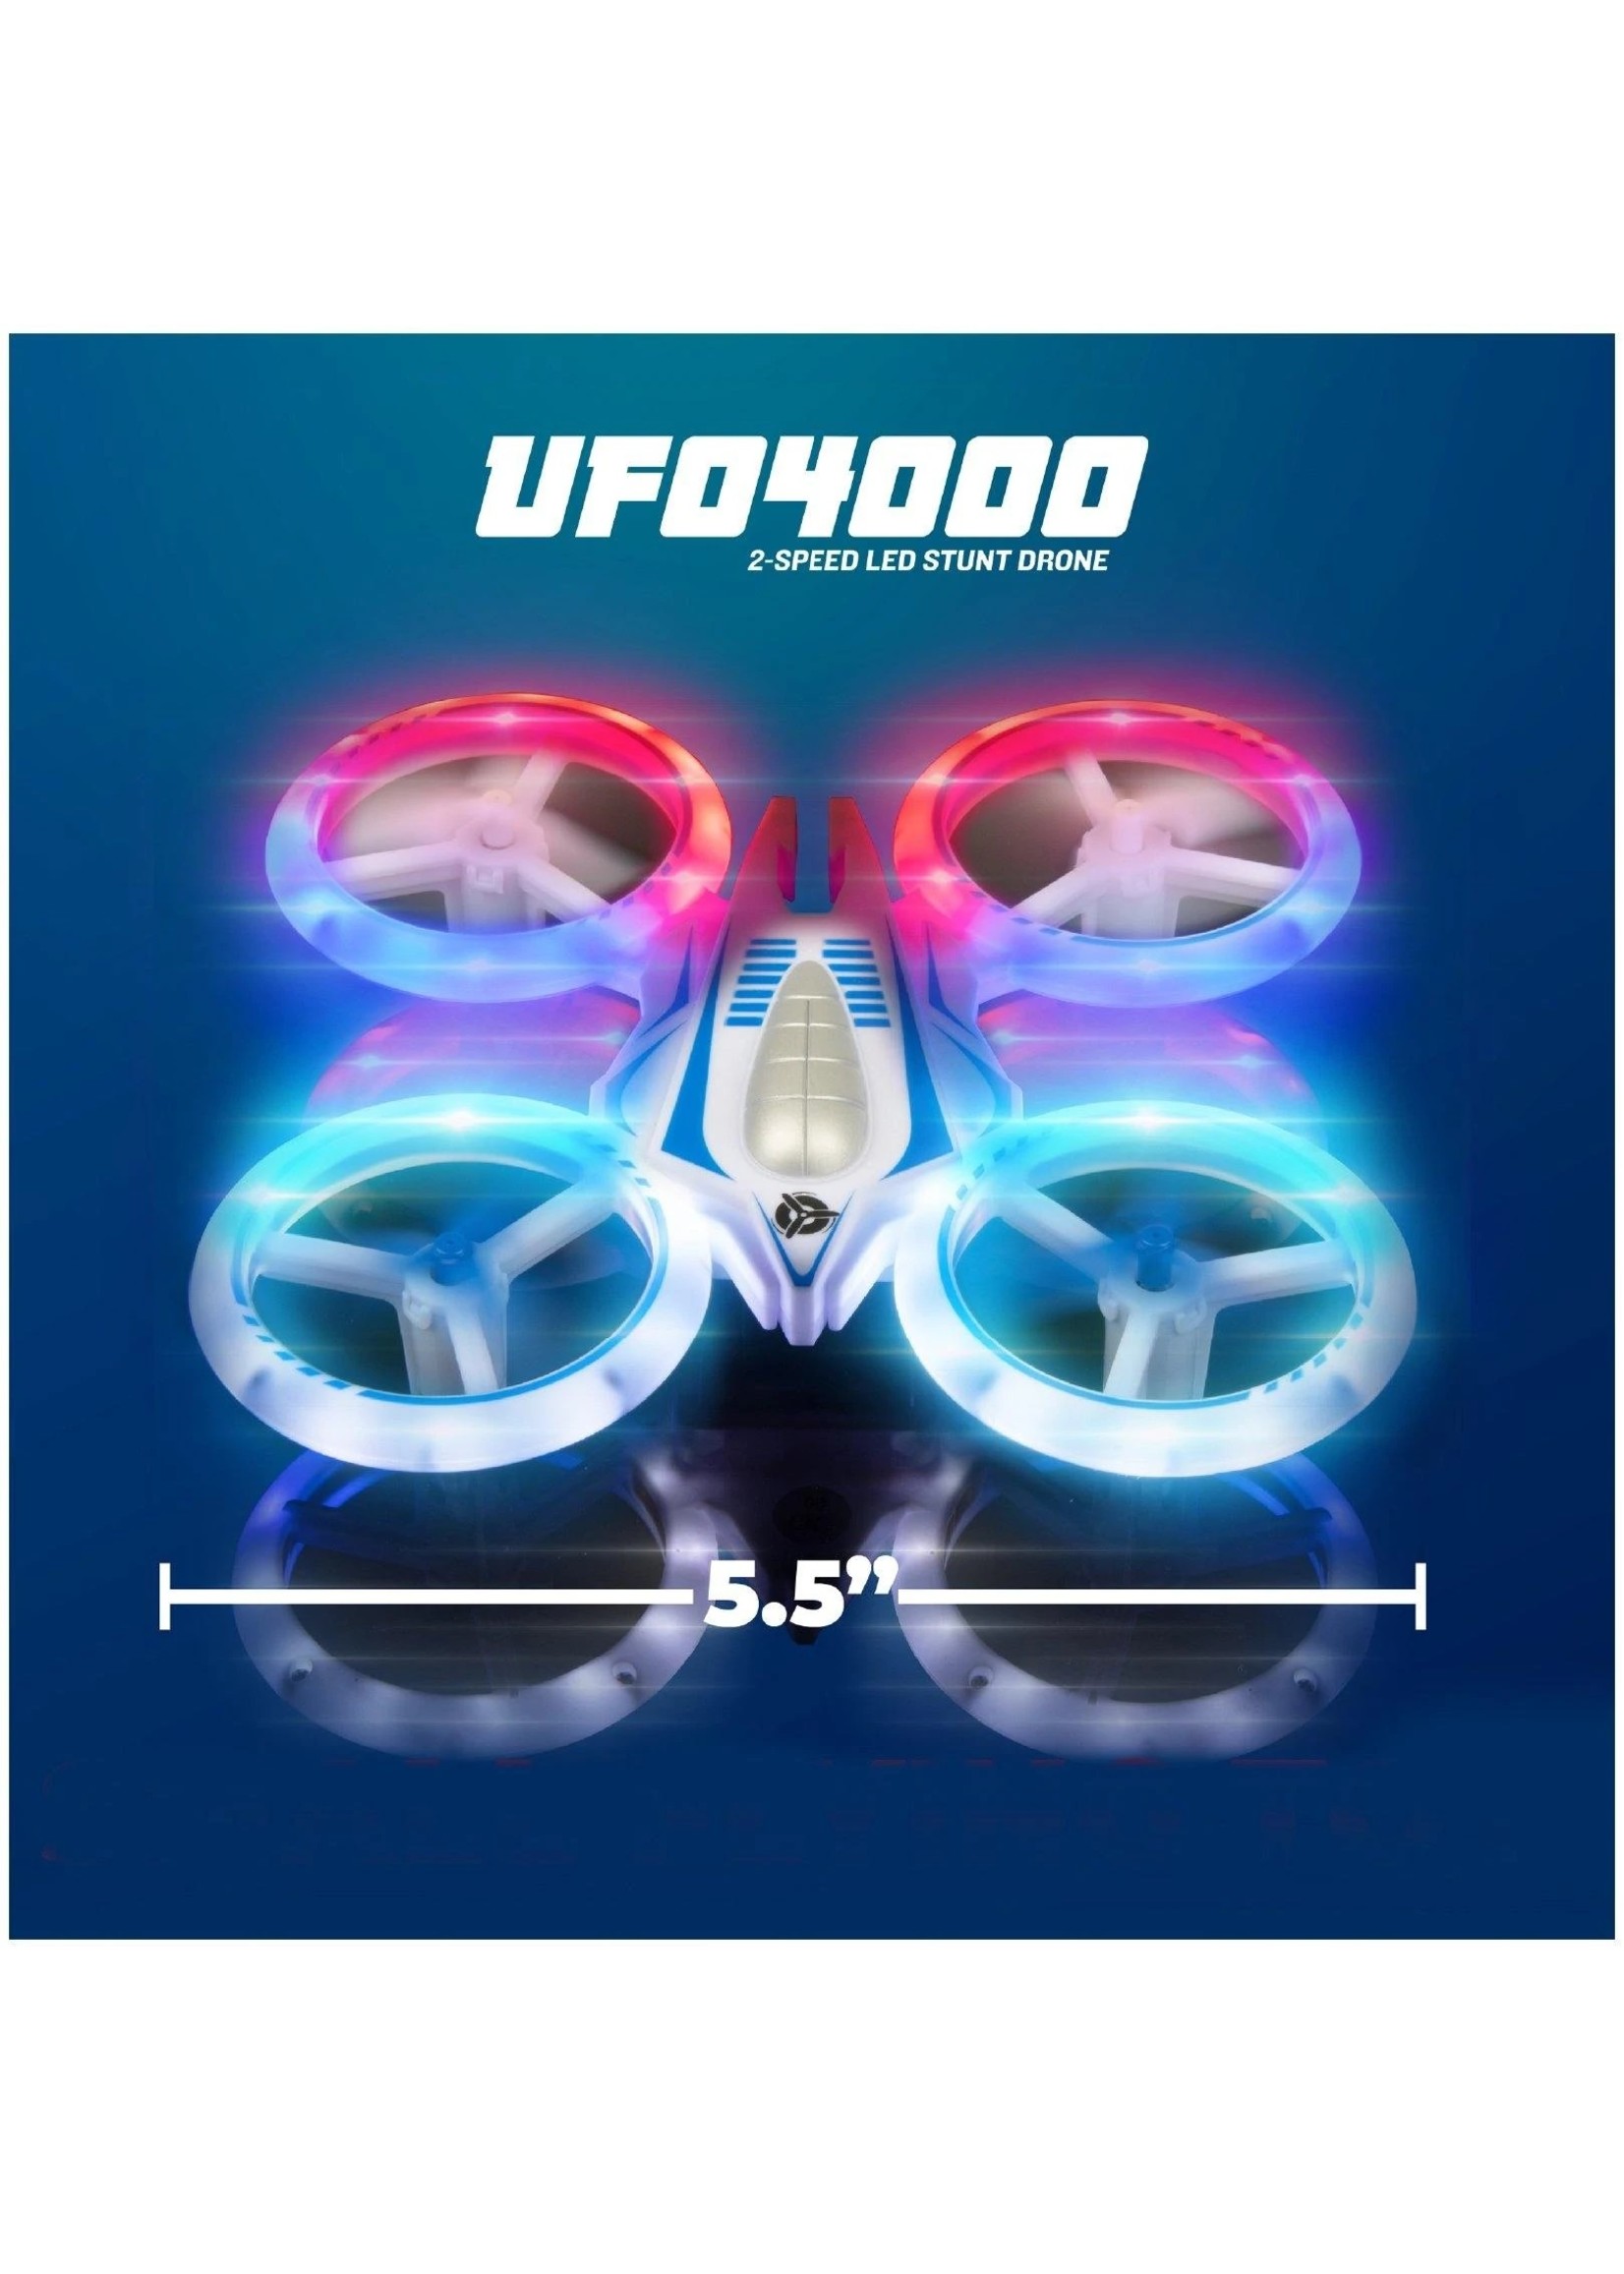 USA Toyz UFO 4000 LED Drone